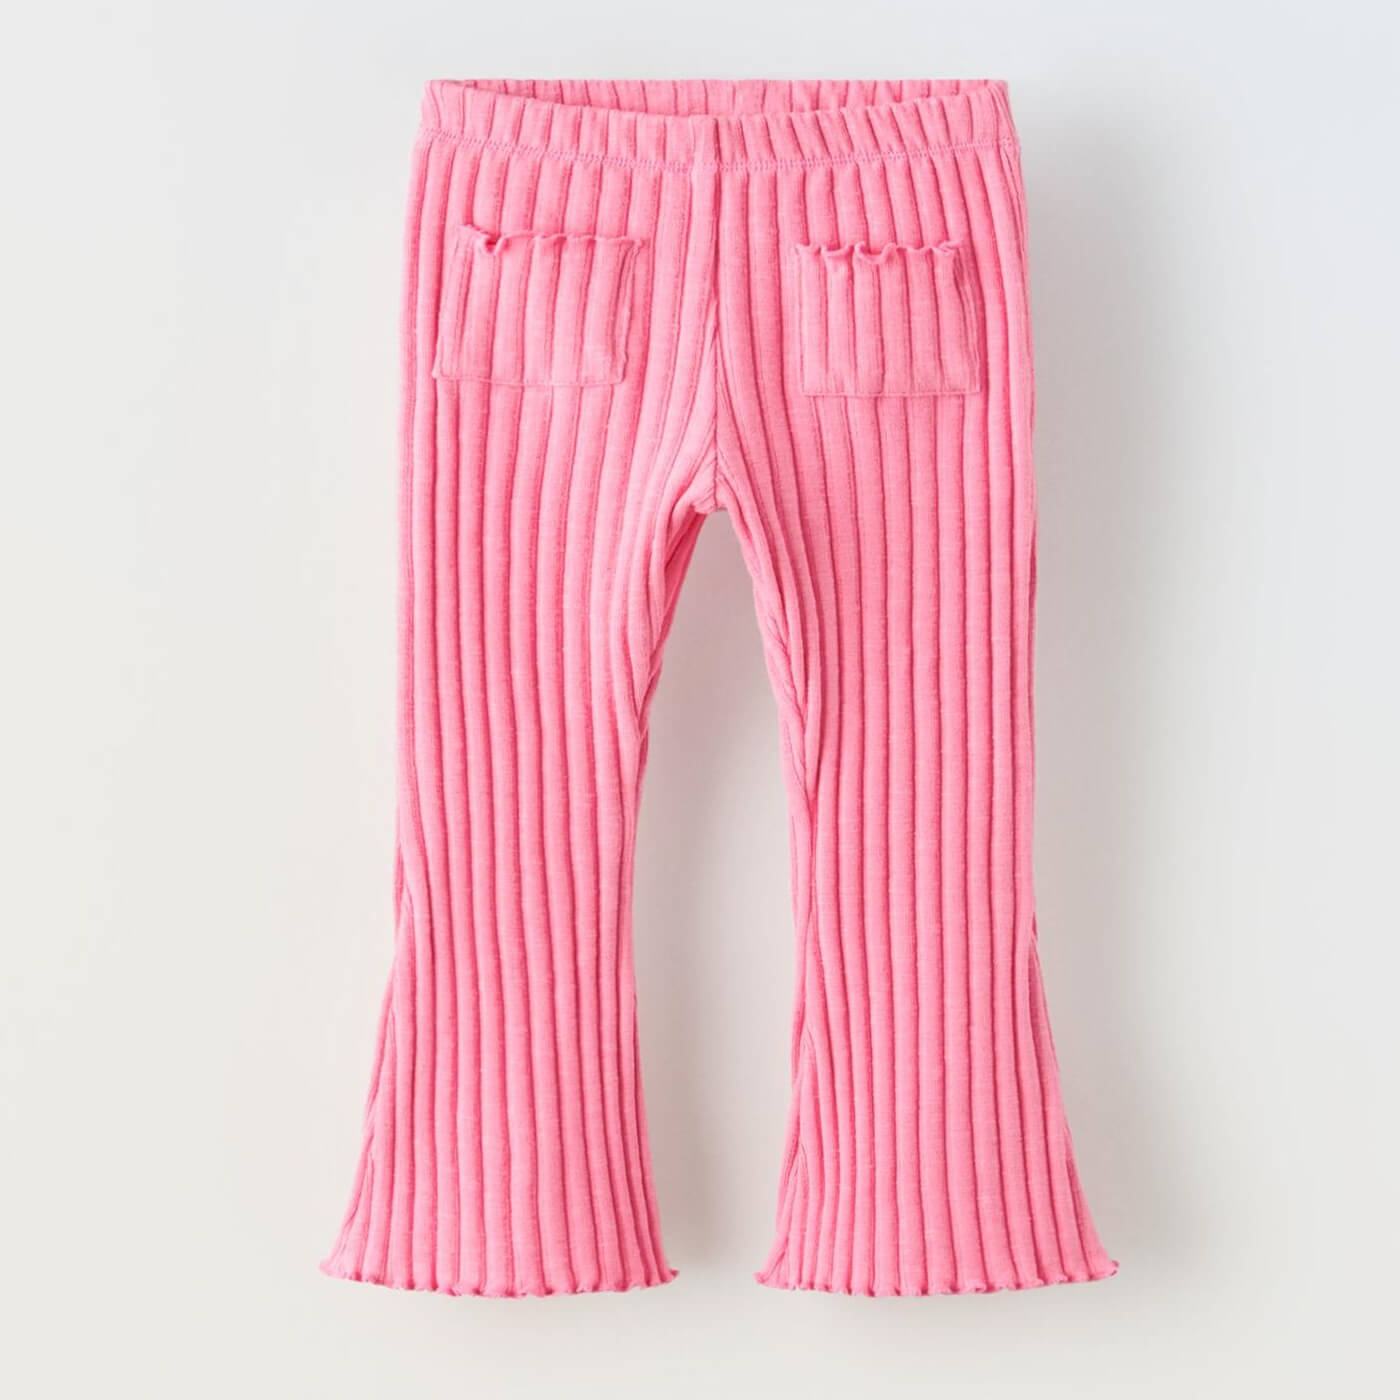 юбка zara textured with mesh pockets розовый Леггинсы расклешенные Zara Ribbed With Pockets, розовый